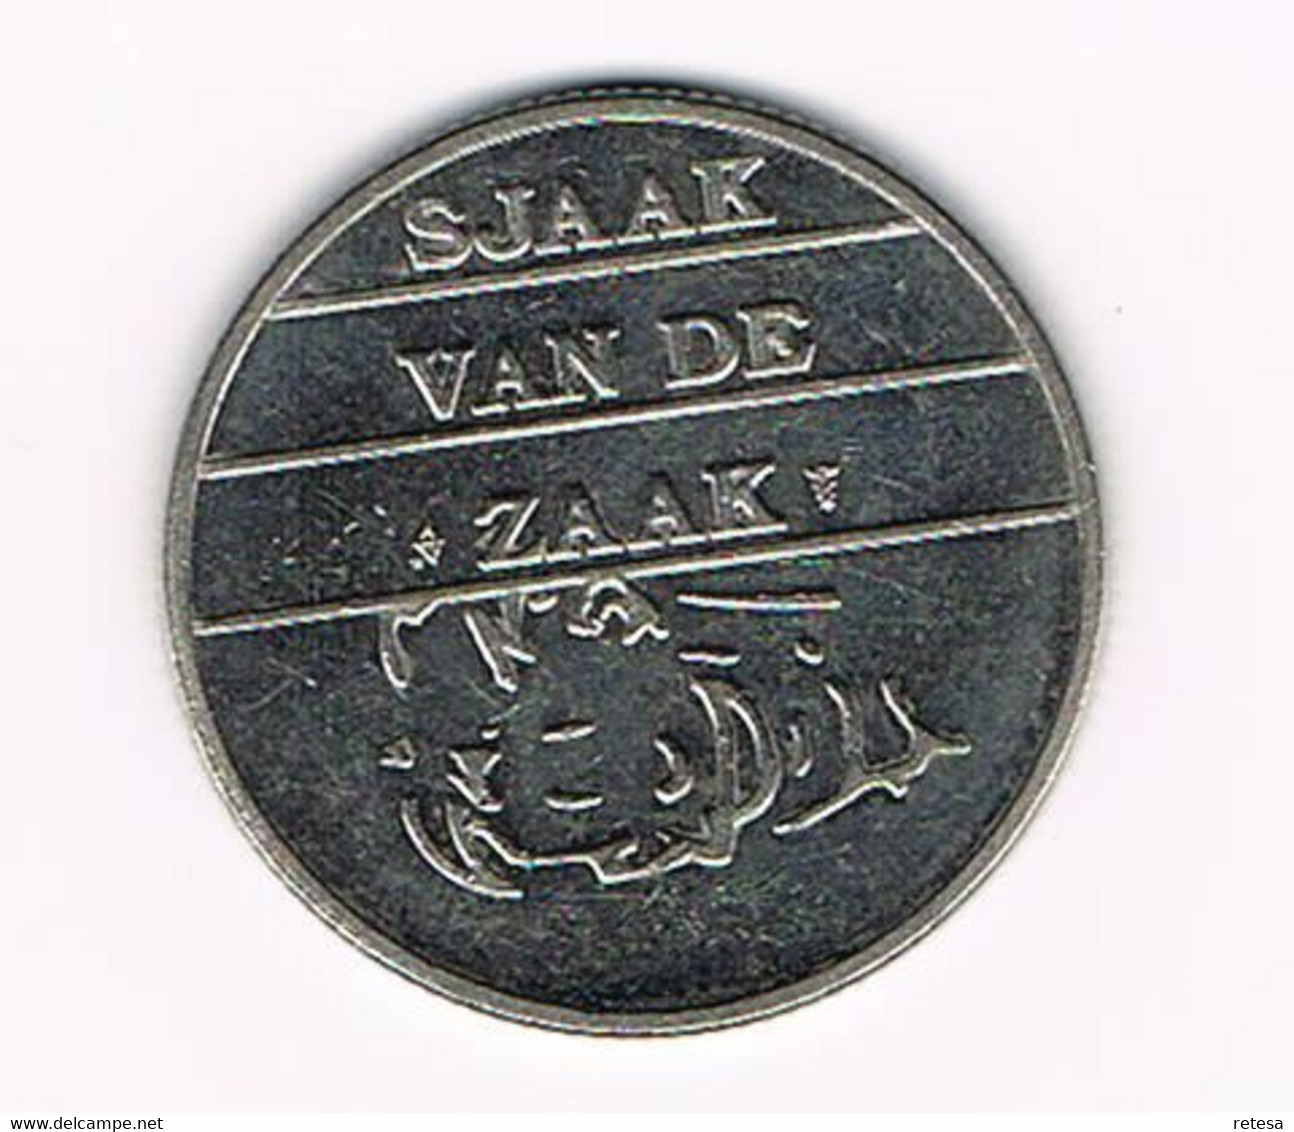 # NEDERLAND  SJAAKIE KONING DER HORICA 2005 MISE EN PLACE - SJAAK VAN DE ZAAK - Monedas Elongadas (elongated Coins)